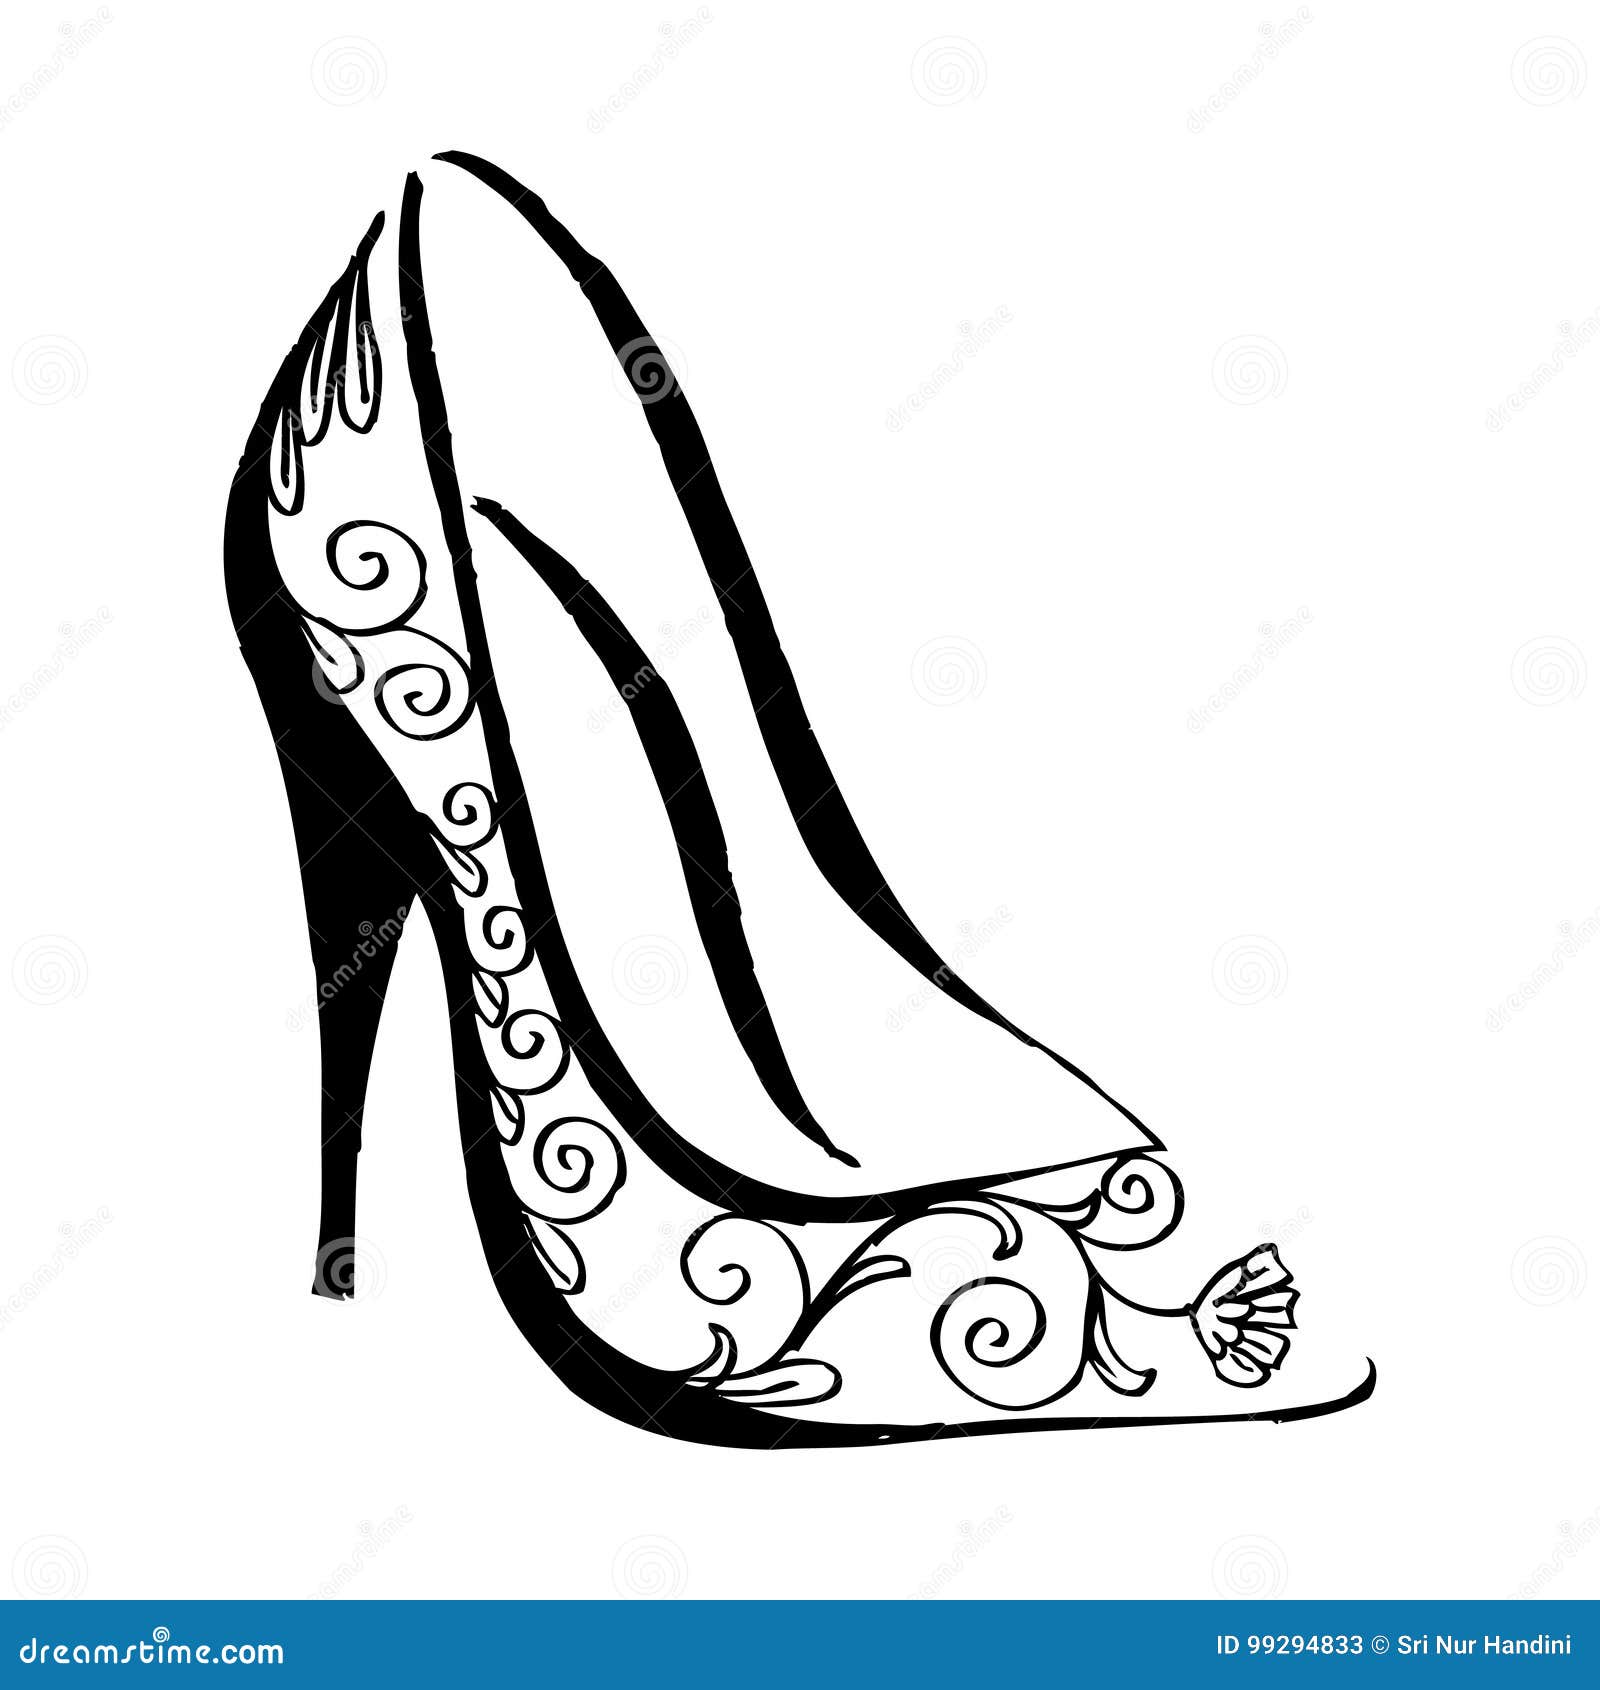 High heels,stiletto shoes drawing.Stay classy .Zebra print.